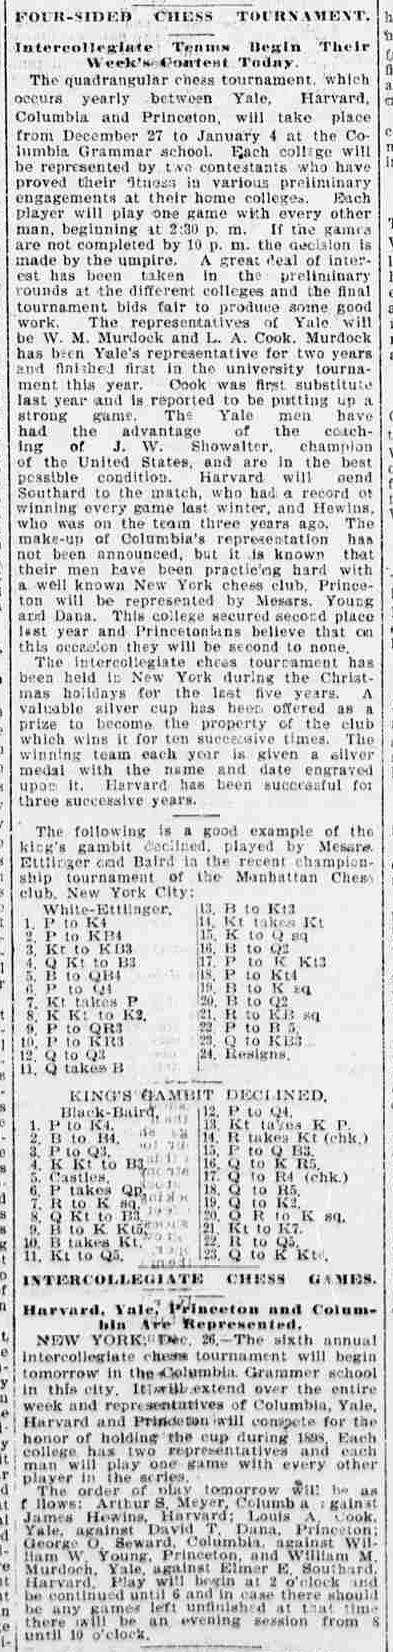 1897.12.27-01 Omaha Daily Bee.jpg